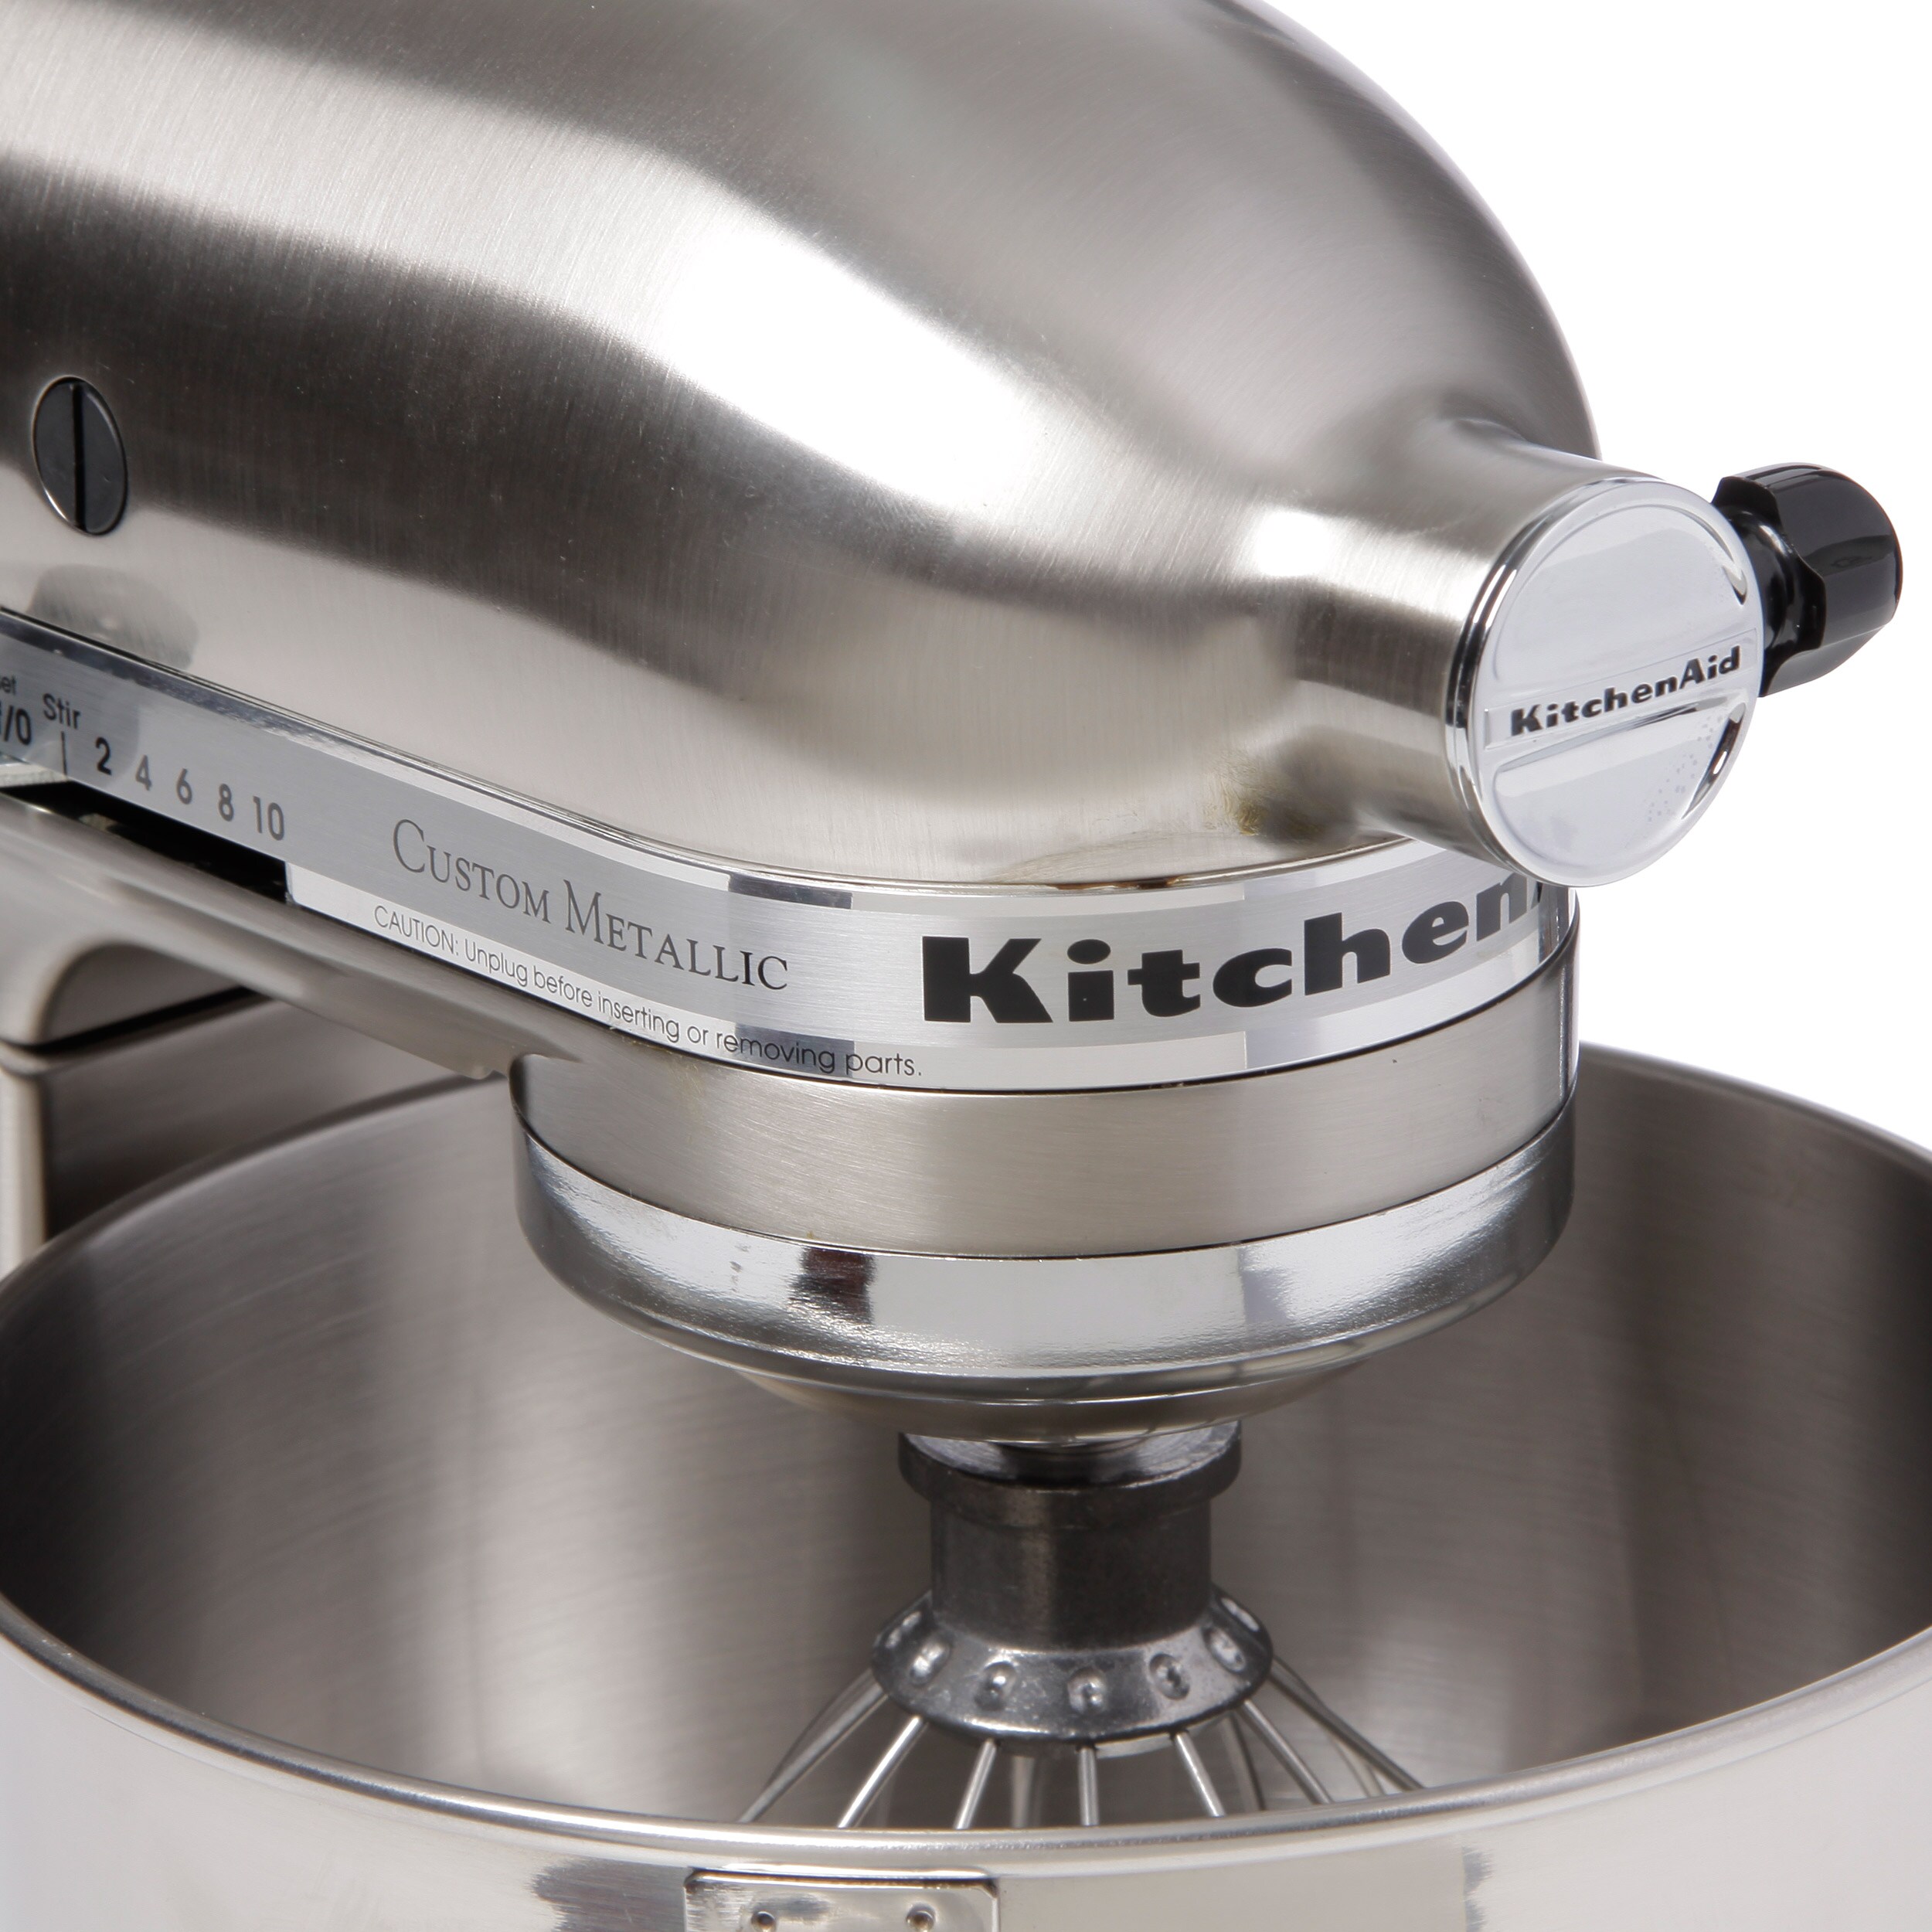 KitchenAid Artisan 5KSM175PSENK 5 Qt. Stand Mixer (Brushed Nickel